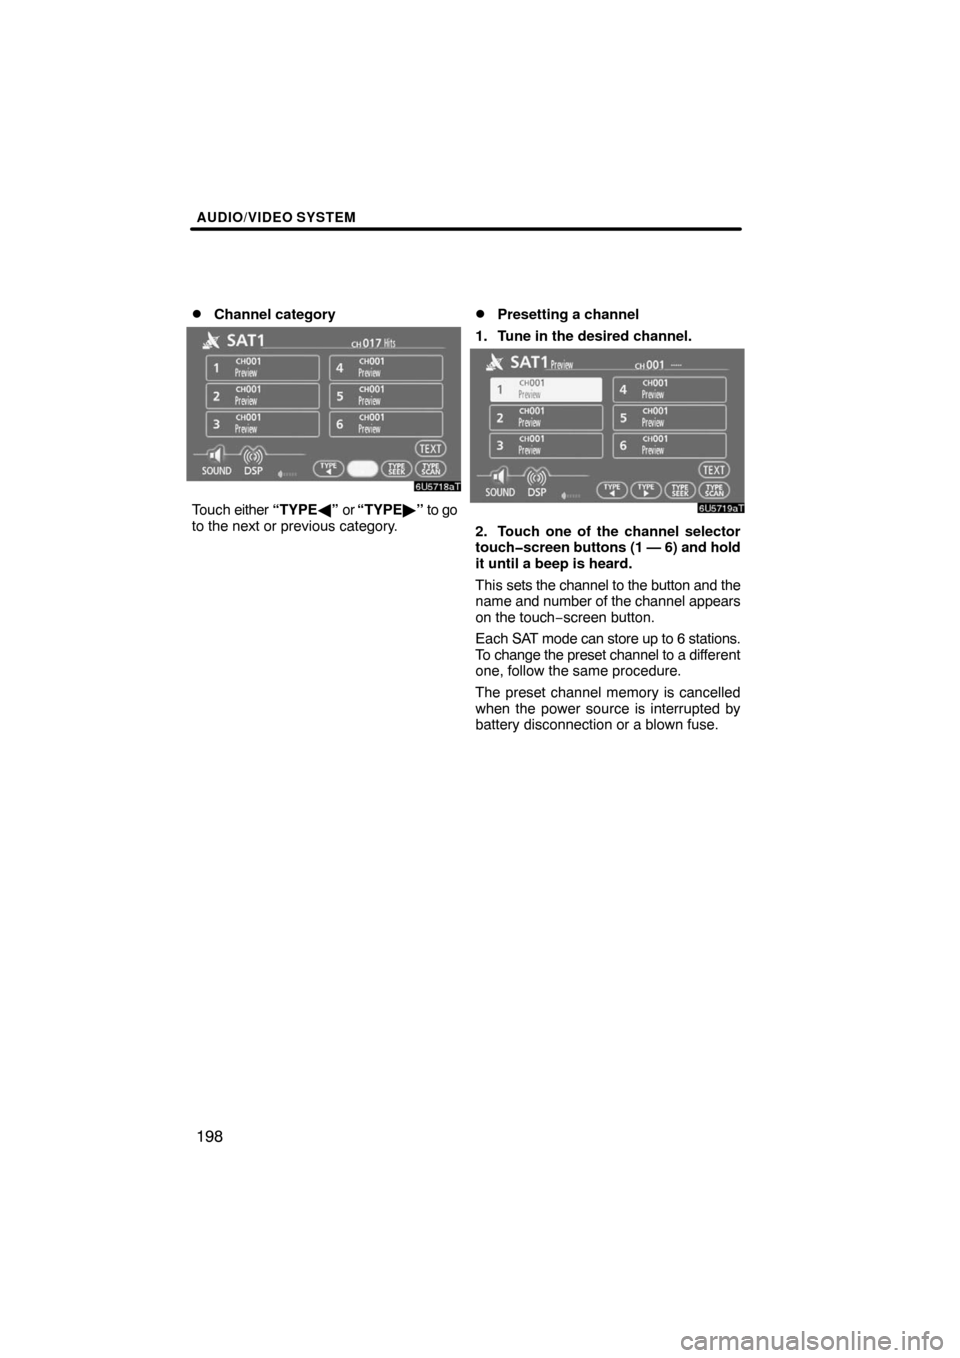 TOYOTA LAND CRUISER 2008 J200 Navigation Manual AUDIO/VIDEO SYSTEM
198 
Channel category
Touch either “TYPE” or “TYPE” to go
to the next or previous category.
Presetting a channel
1. Tune in the desired channel.
2. Touch one of the chan